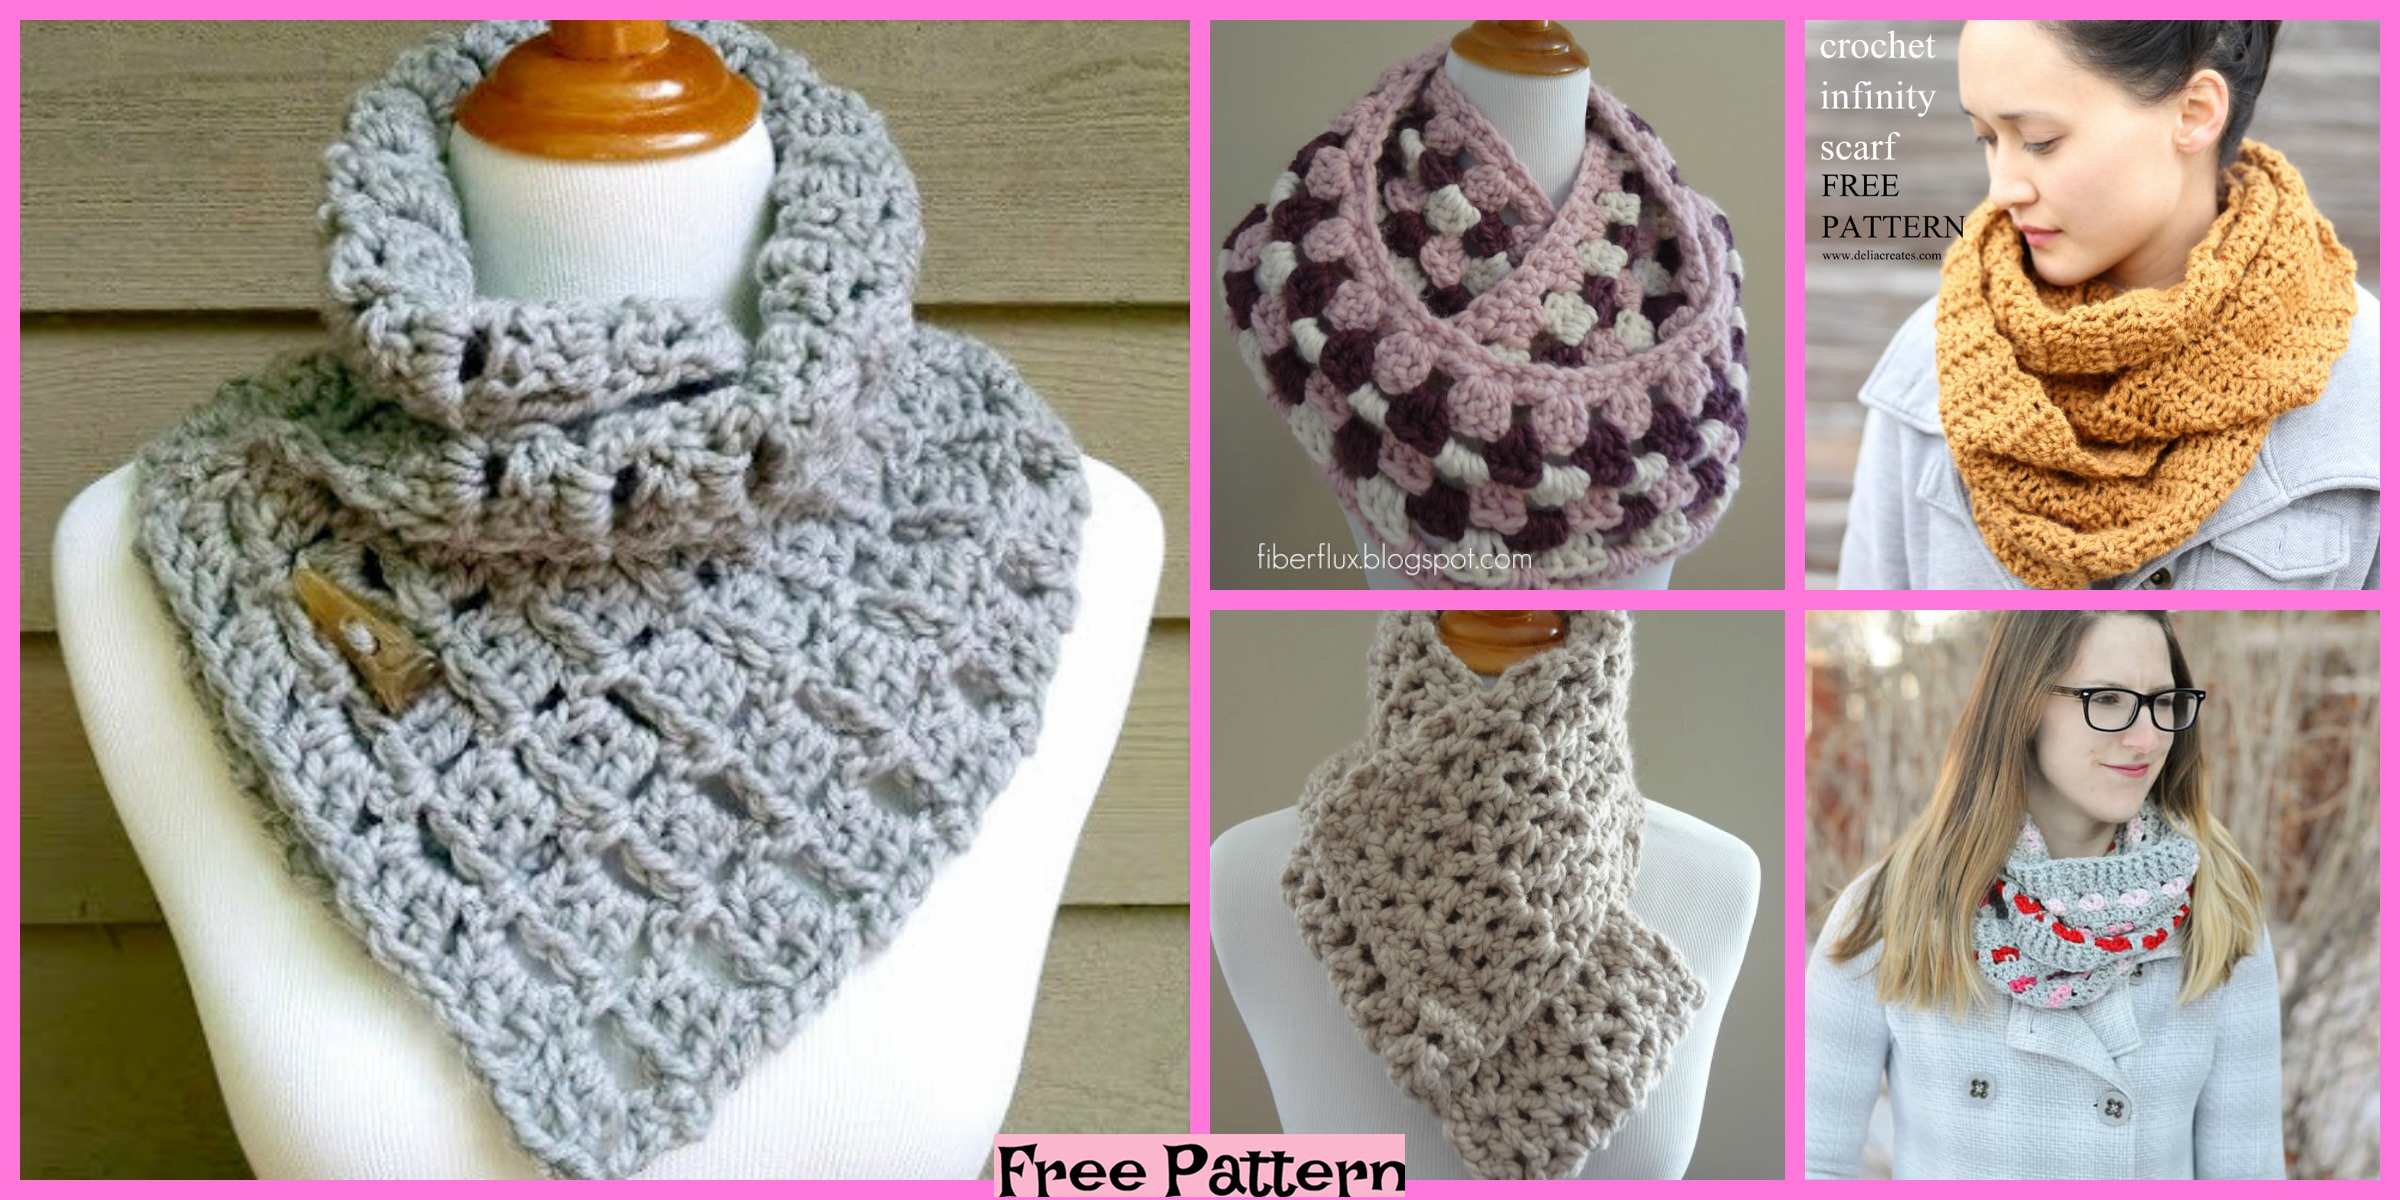 12 Crochet Infinity Scarves – Free Patterns